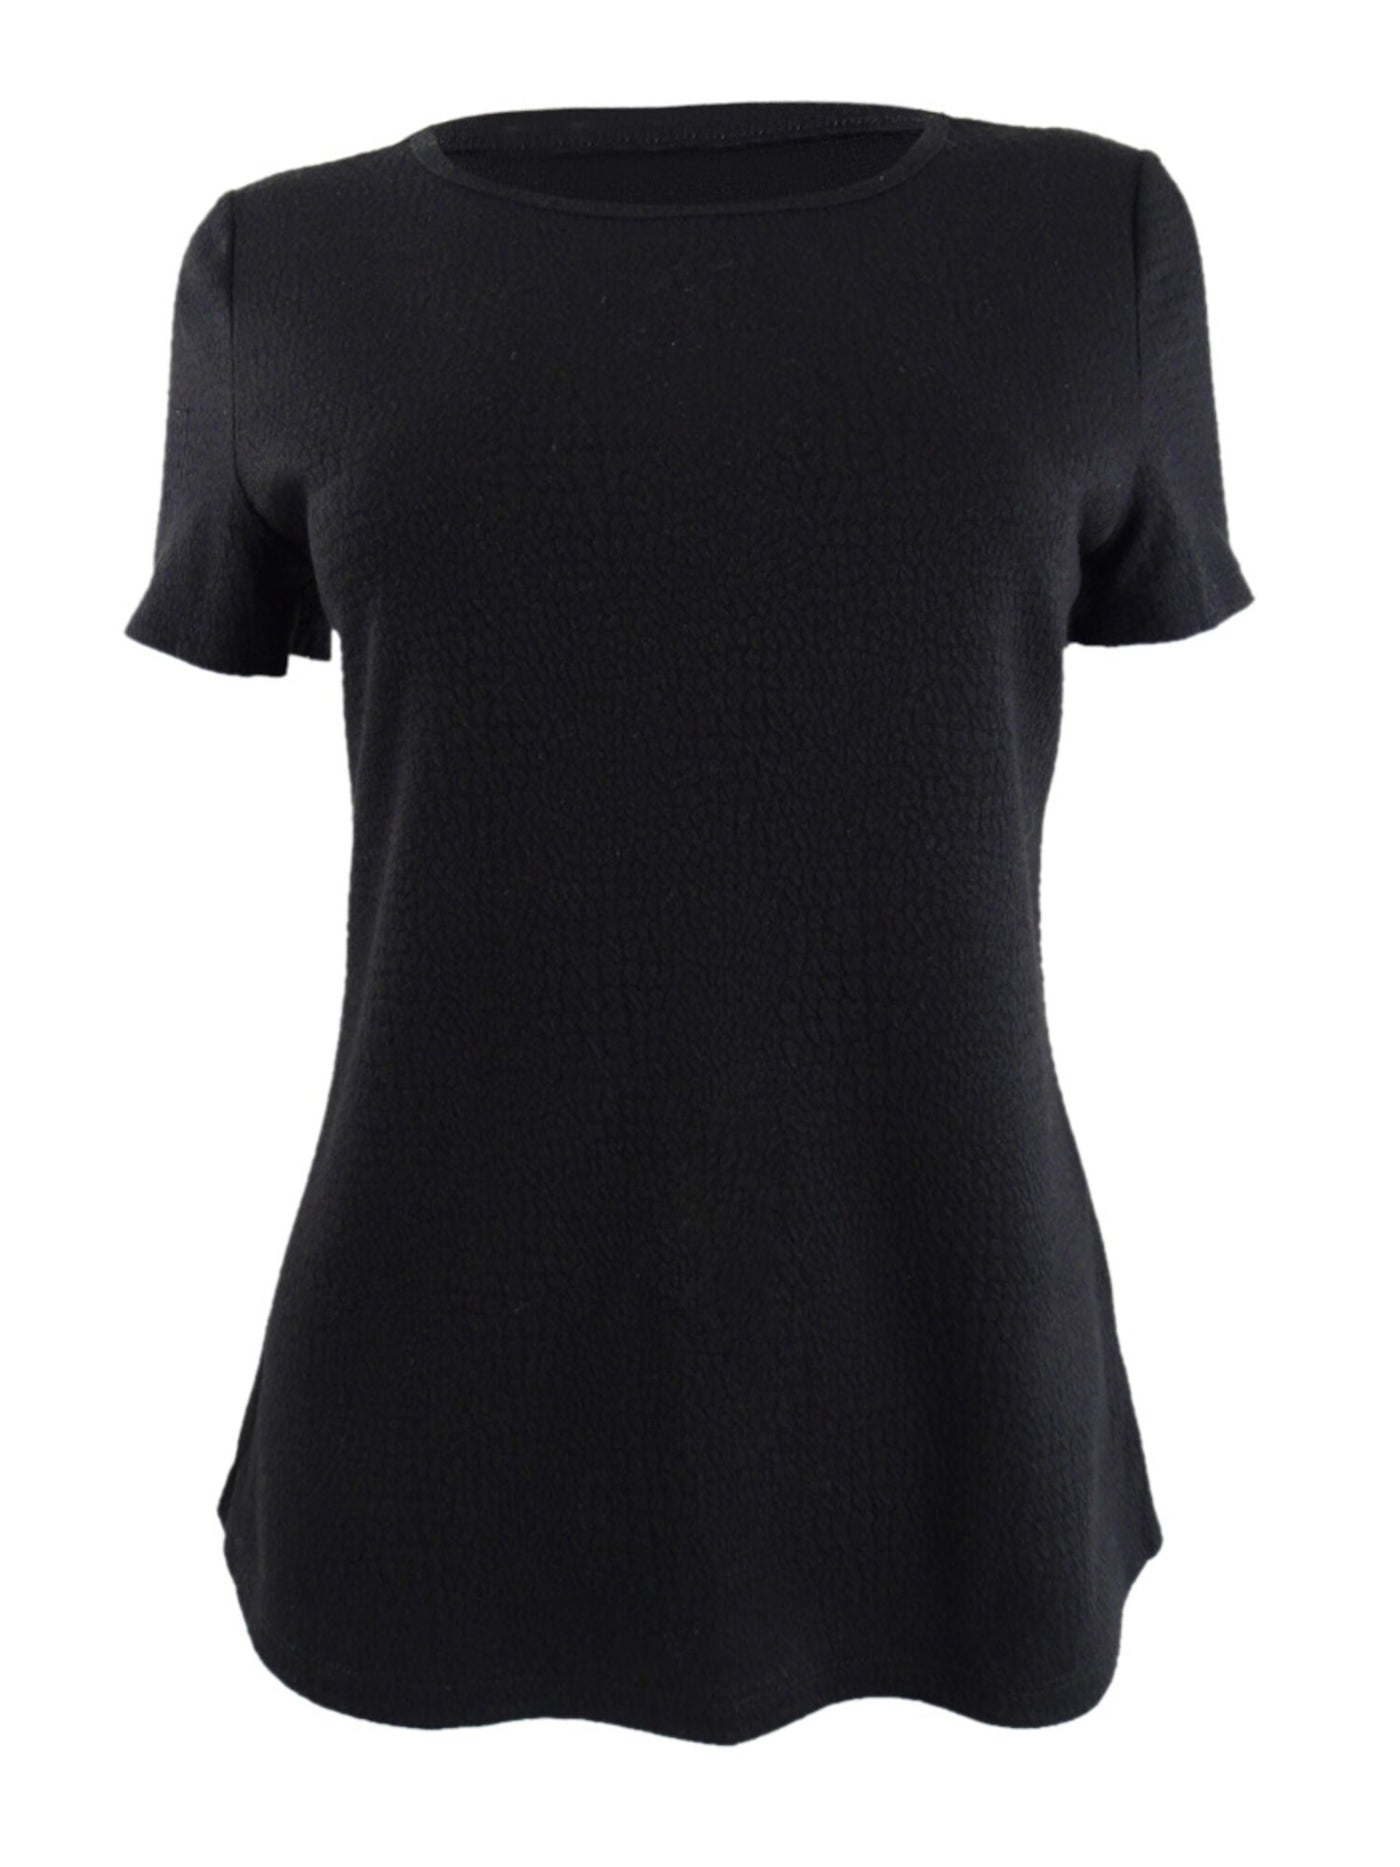 BAR III Womens Black Stretch Textured Short Sleeve Scoop Neck Wear To Work Top XS